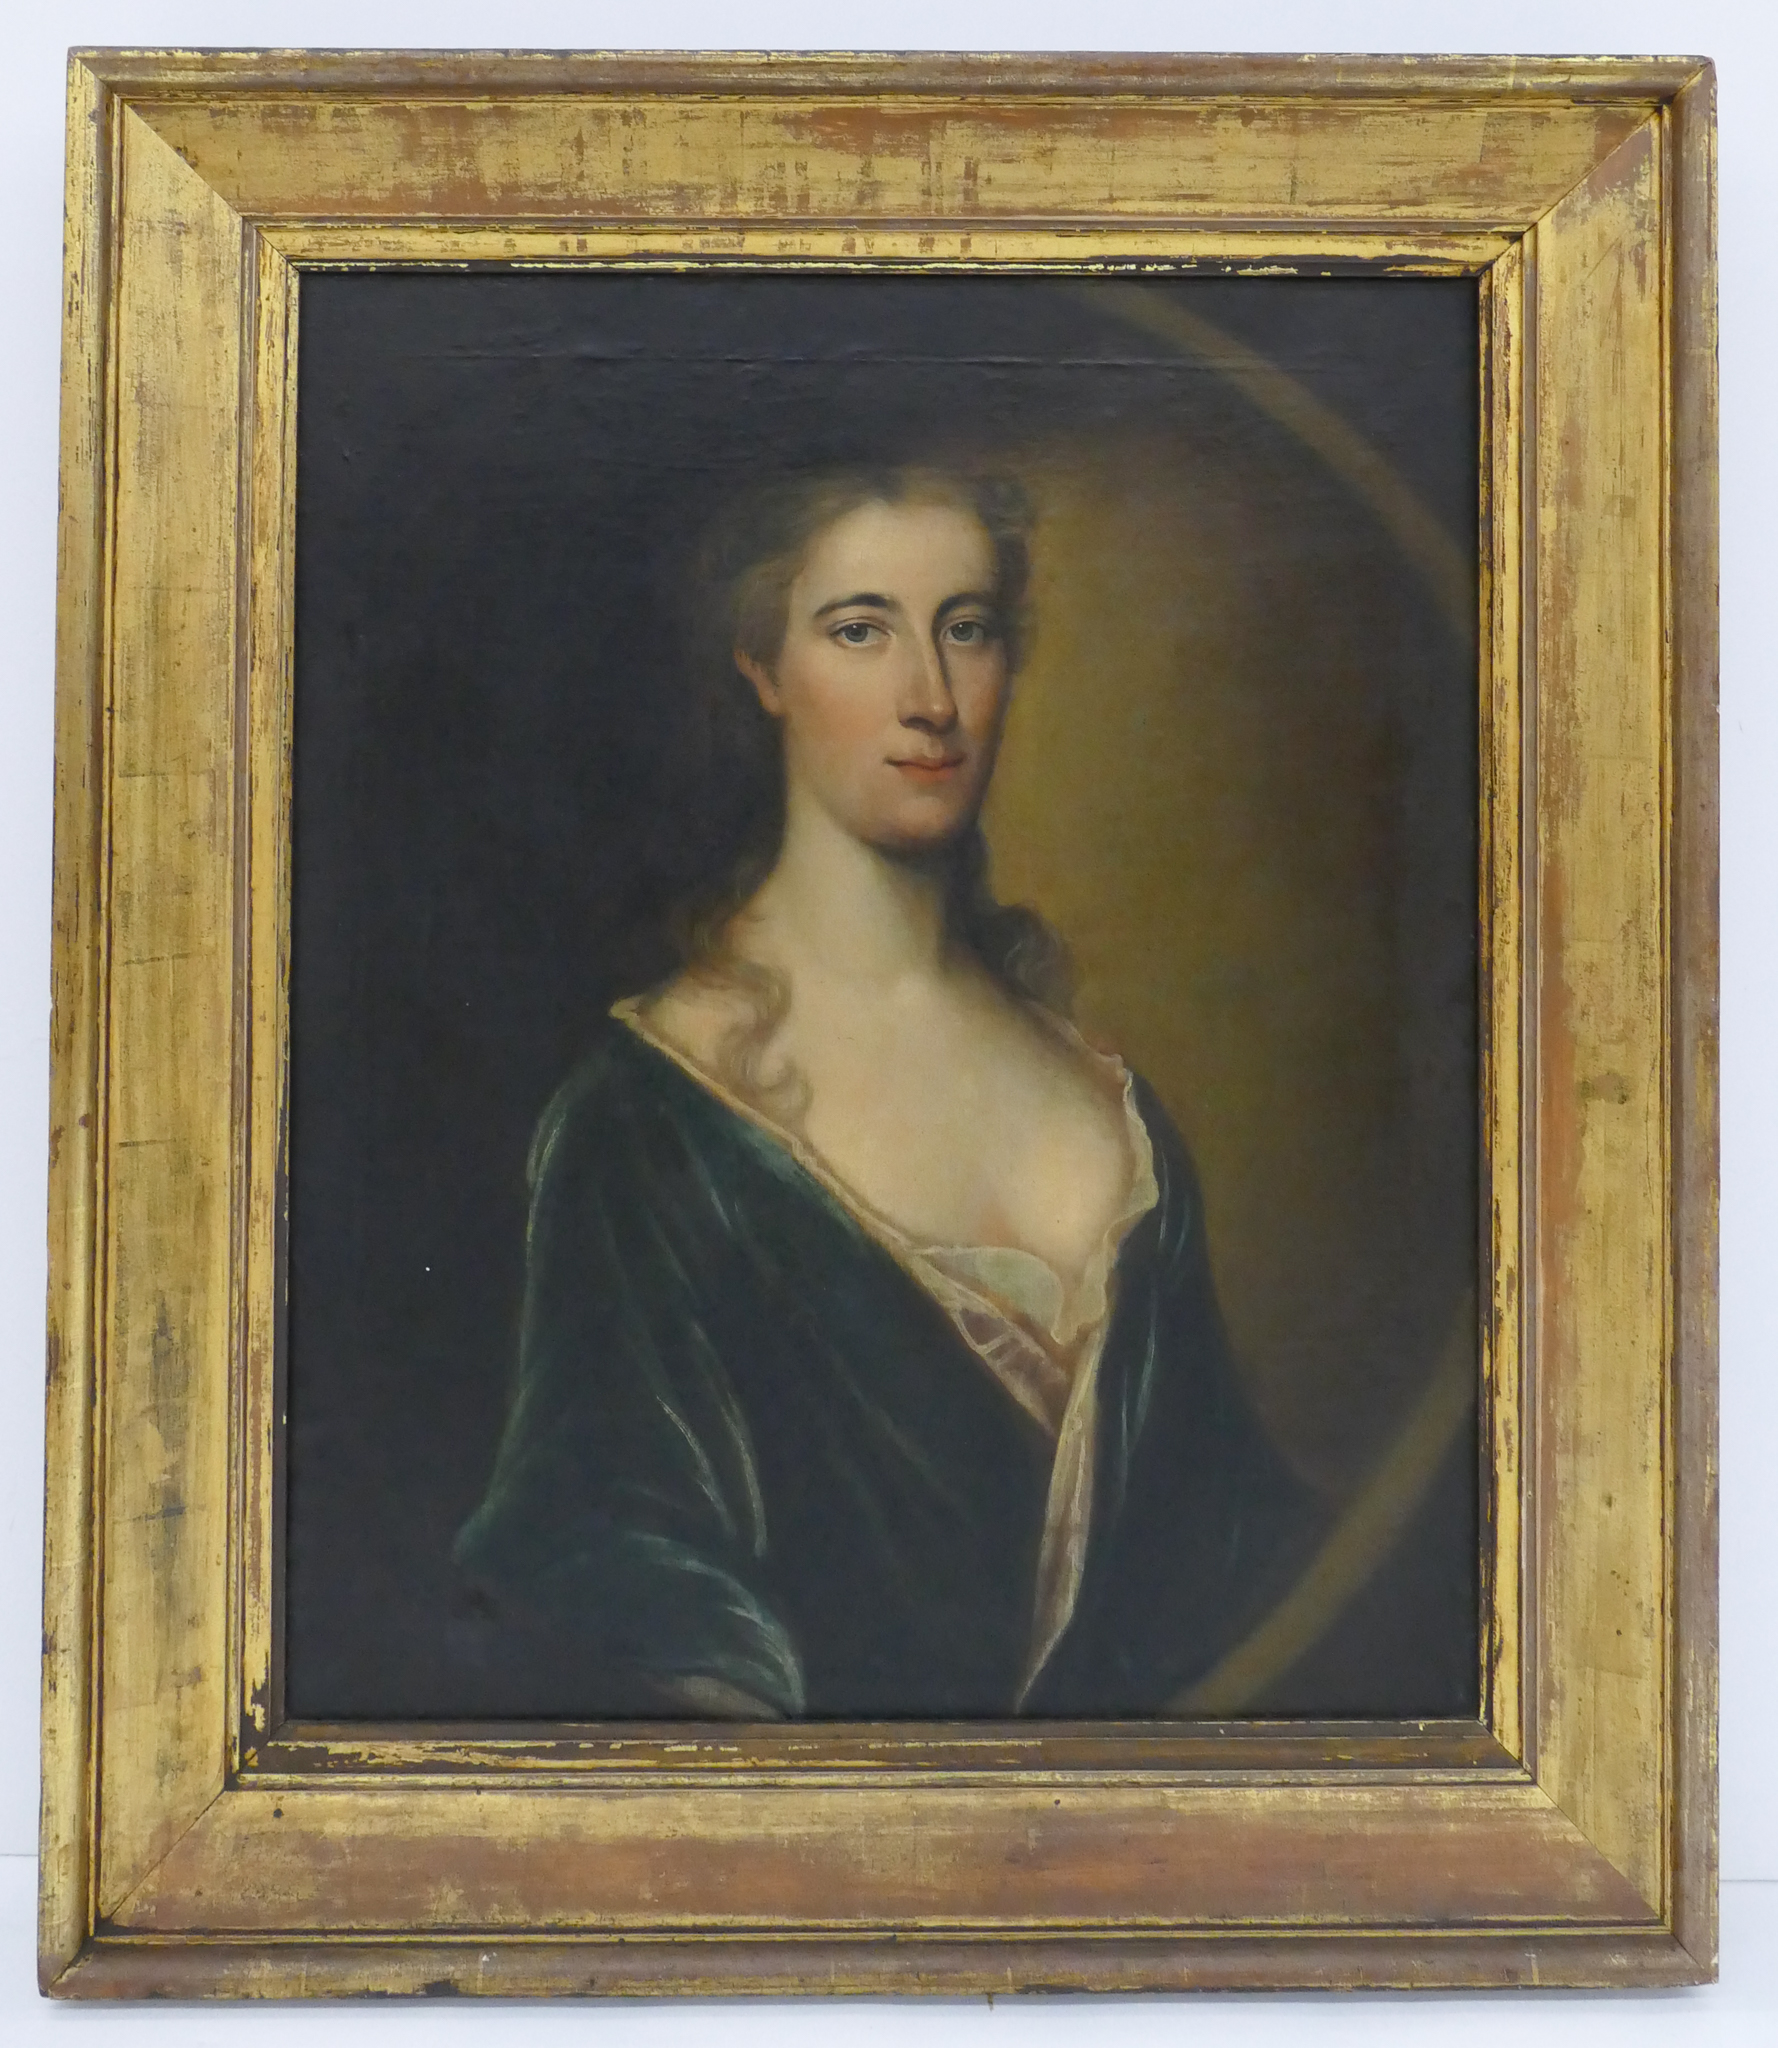 English School 18th Century Portrait 2d99b0